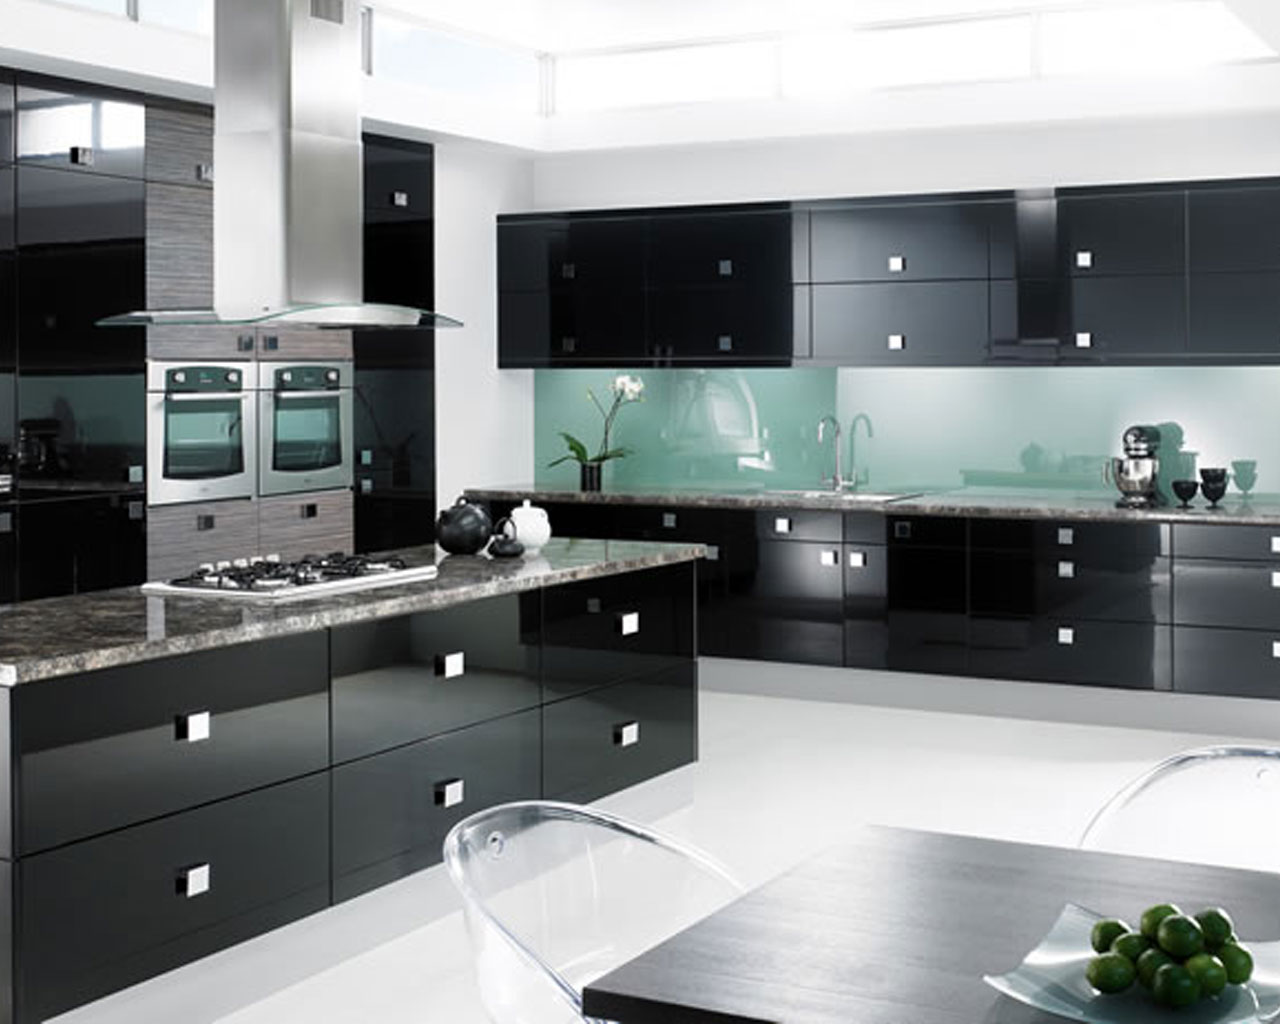 Advance Designing Ideas for Kitchen Interiors